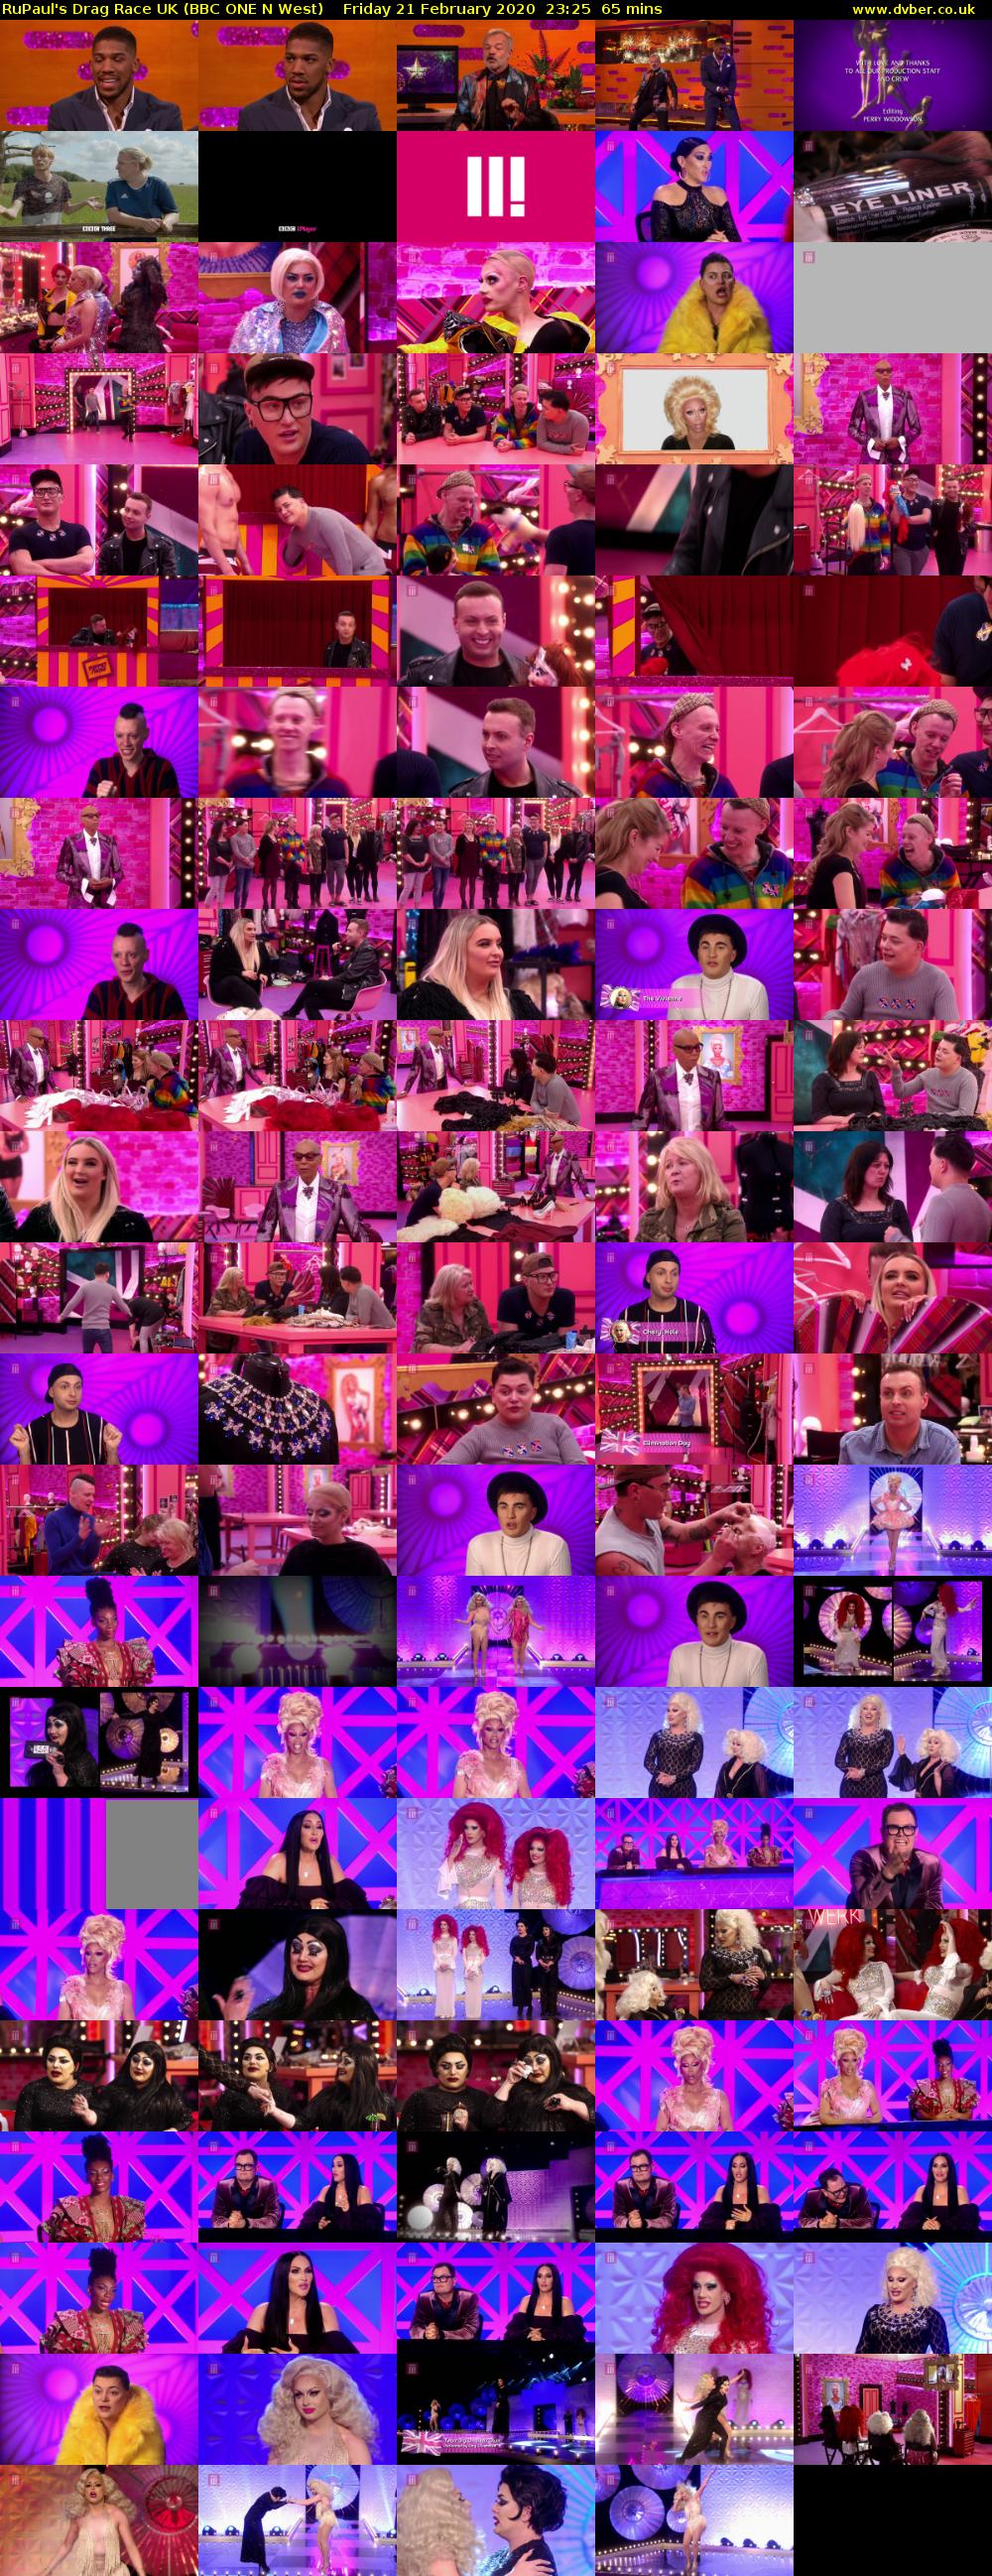 RuPaul's Drag Race UK (BBC ONE N West) Friday 21 February 2020 23:25 - 00:30